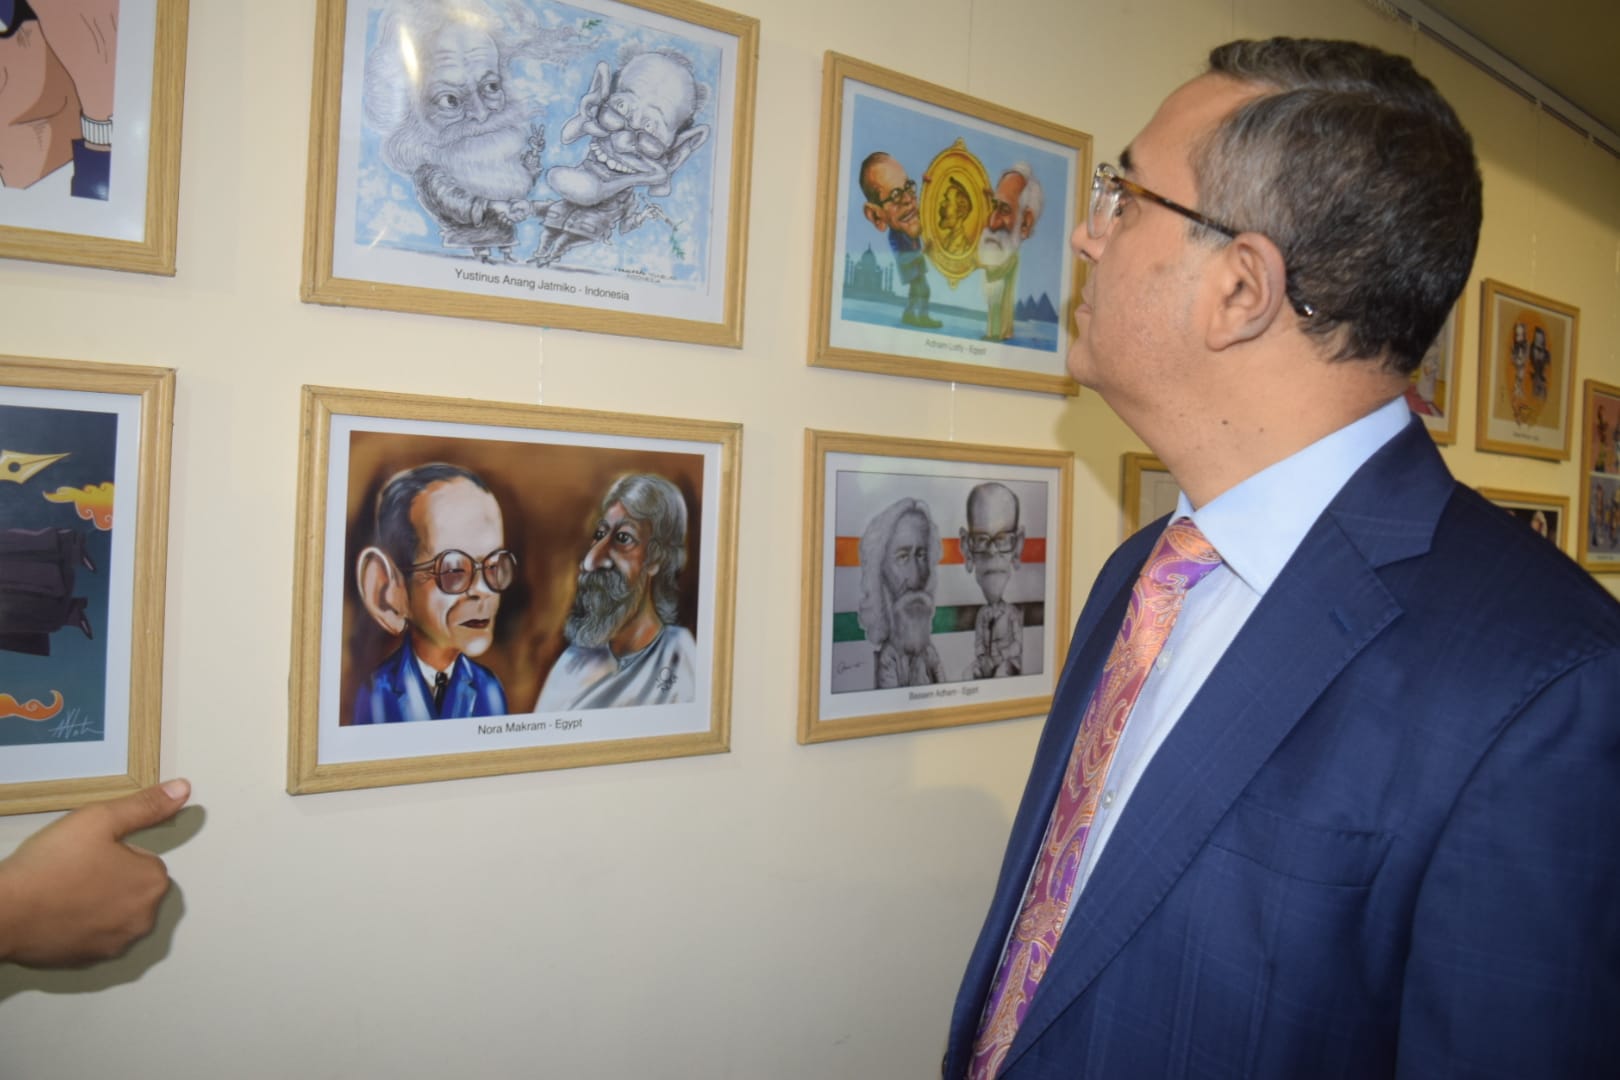 Indian Ambassador to Cairo inaugurates "Tagore and Mahfouz Caricature" Exhibition